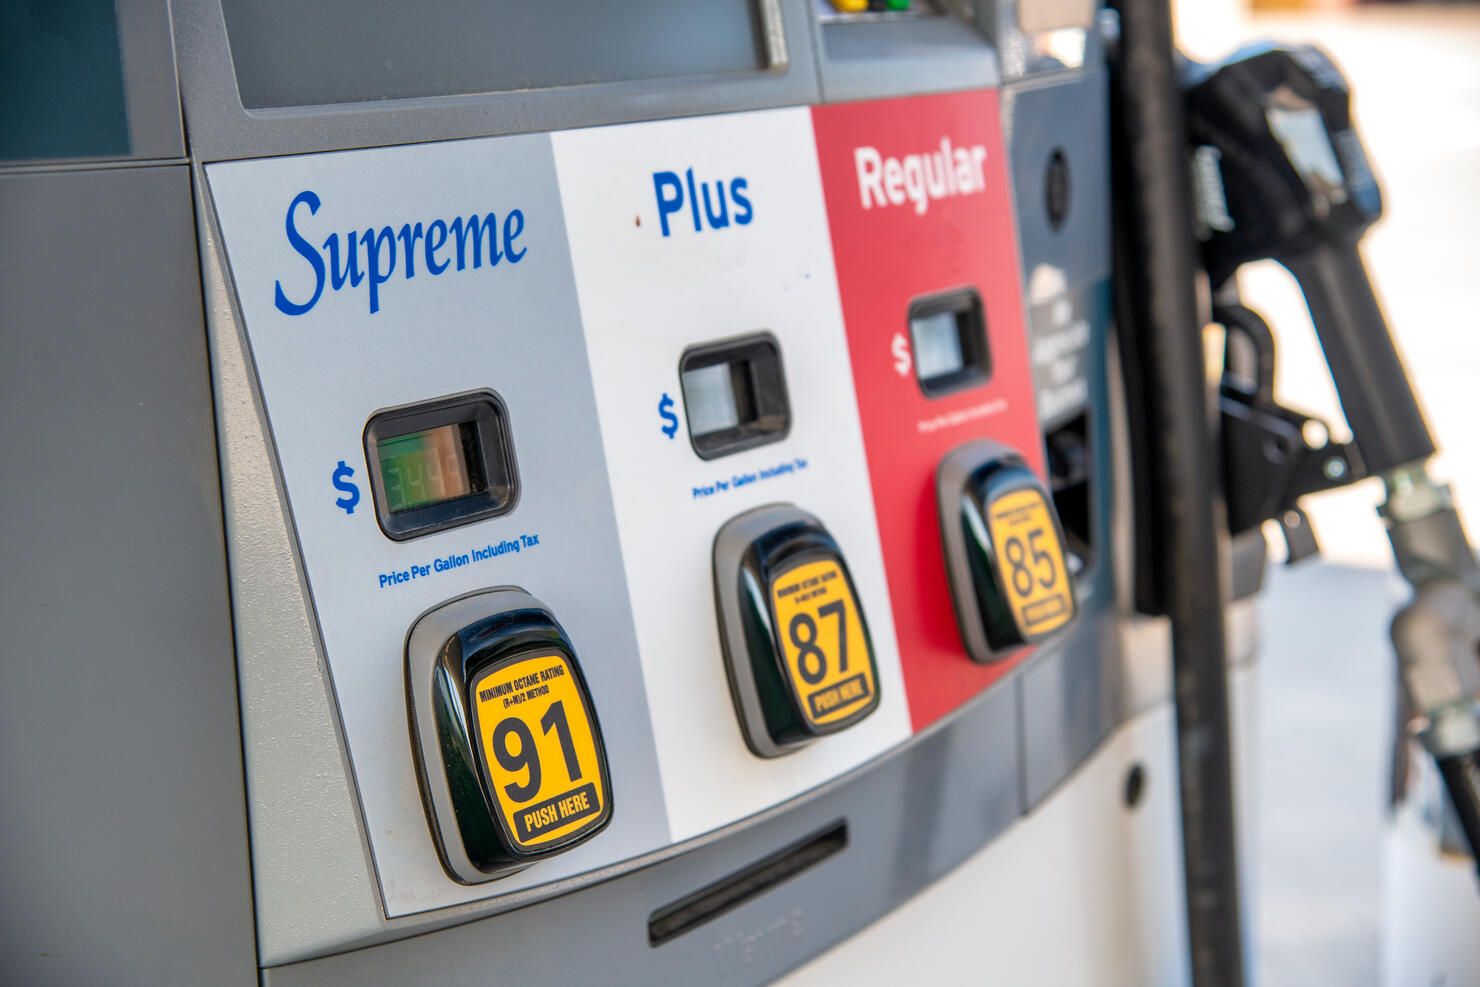 Supreme, Plus, Regular gasoline at gas station pump.